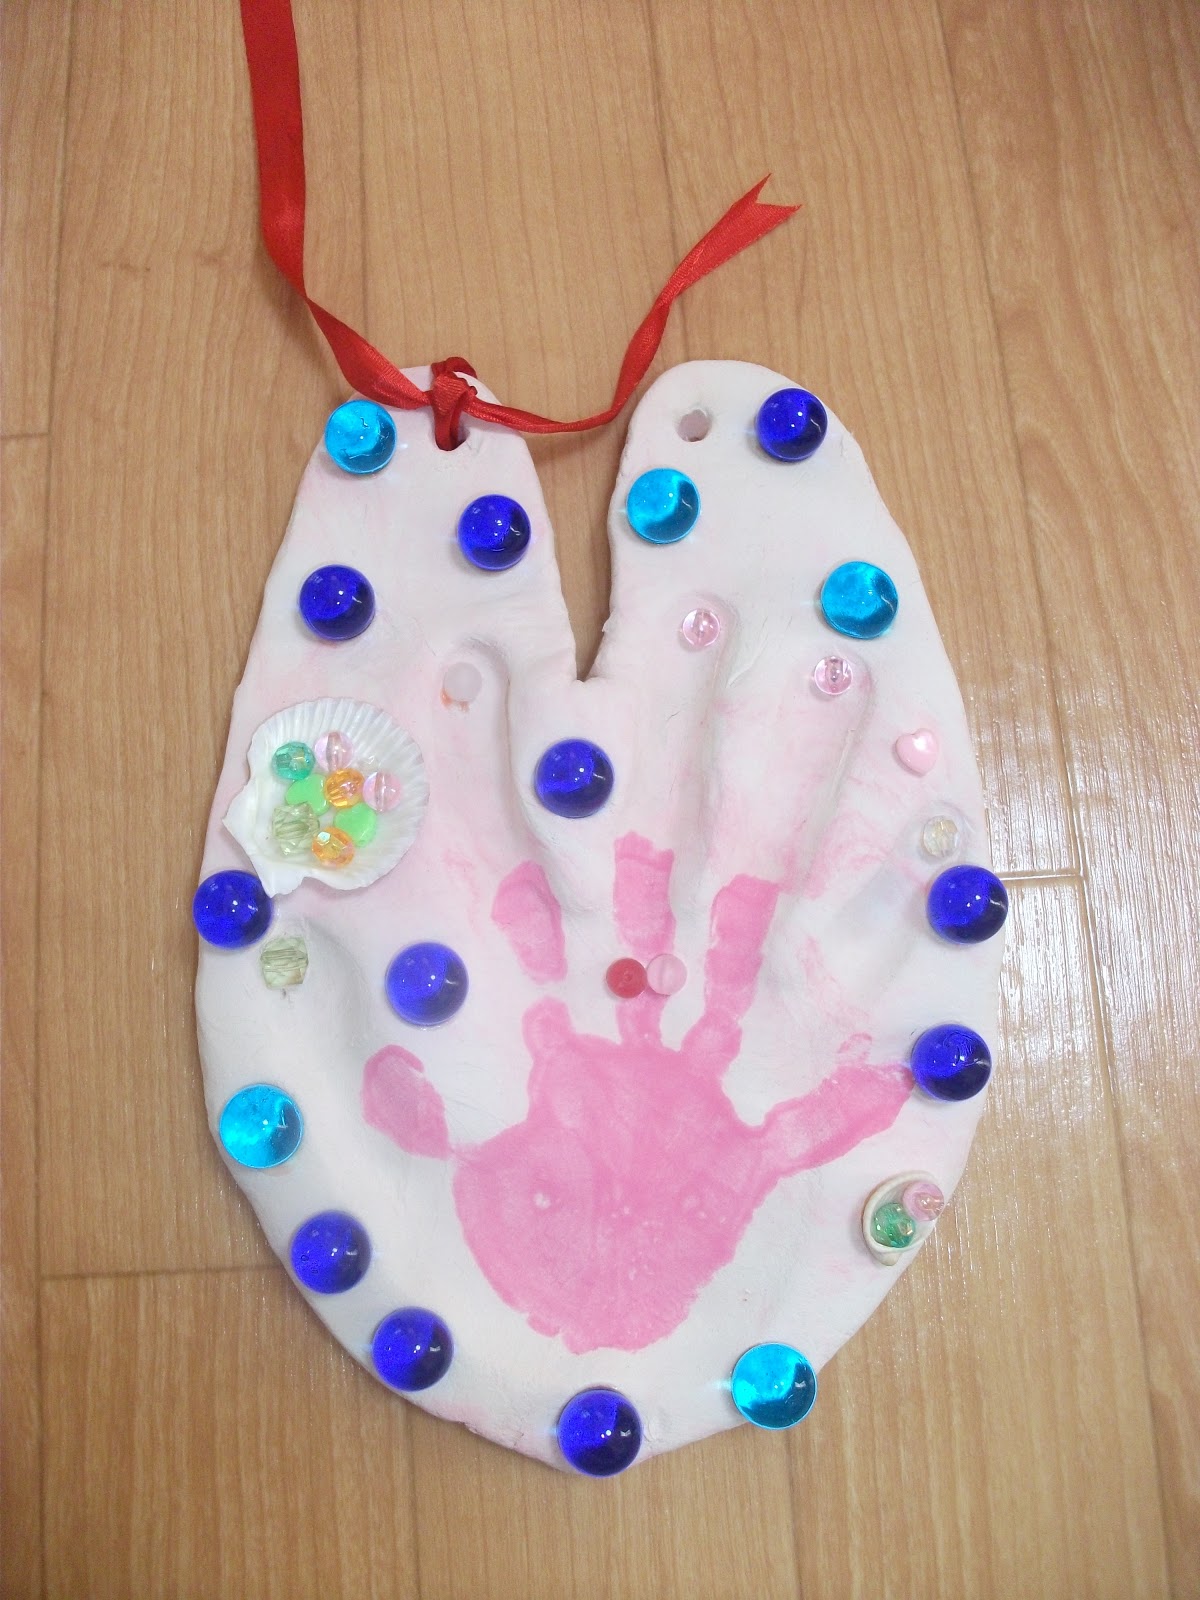 Preschooler Mother Day Art - Mother's Day Crafts Gift Ideas - Great for Preschool ...